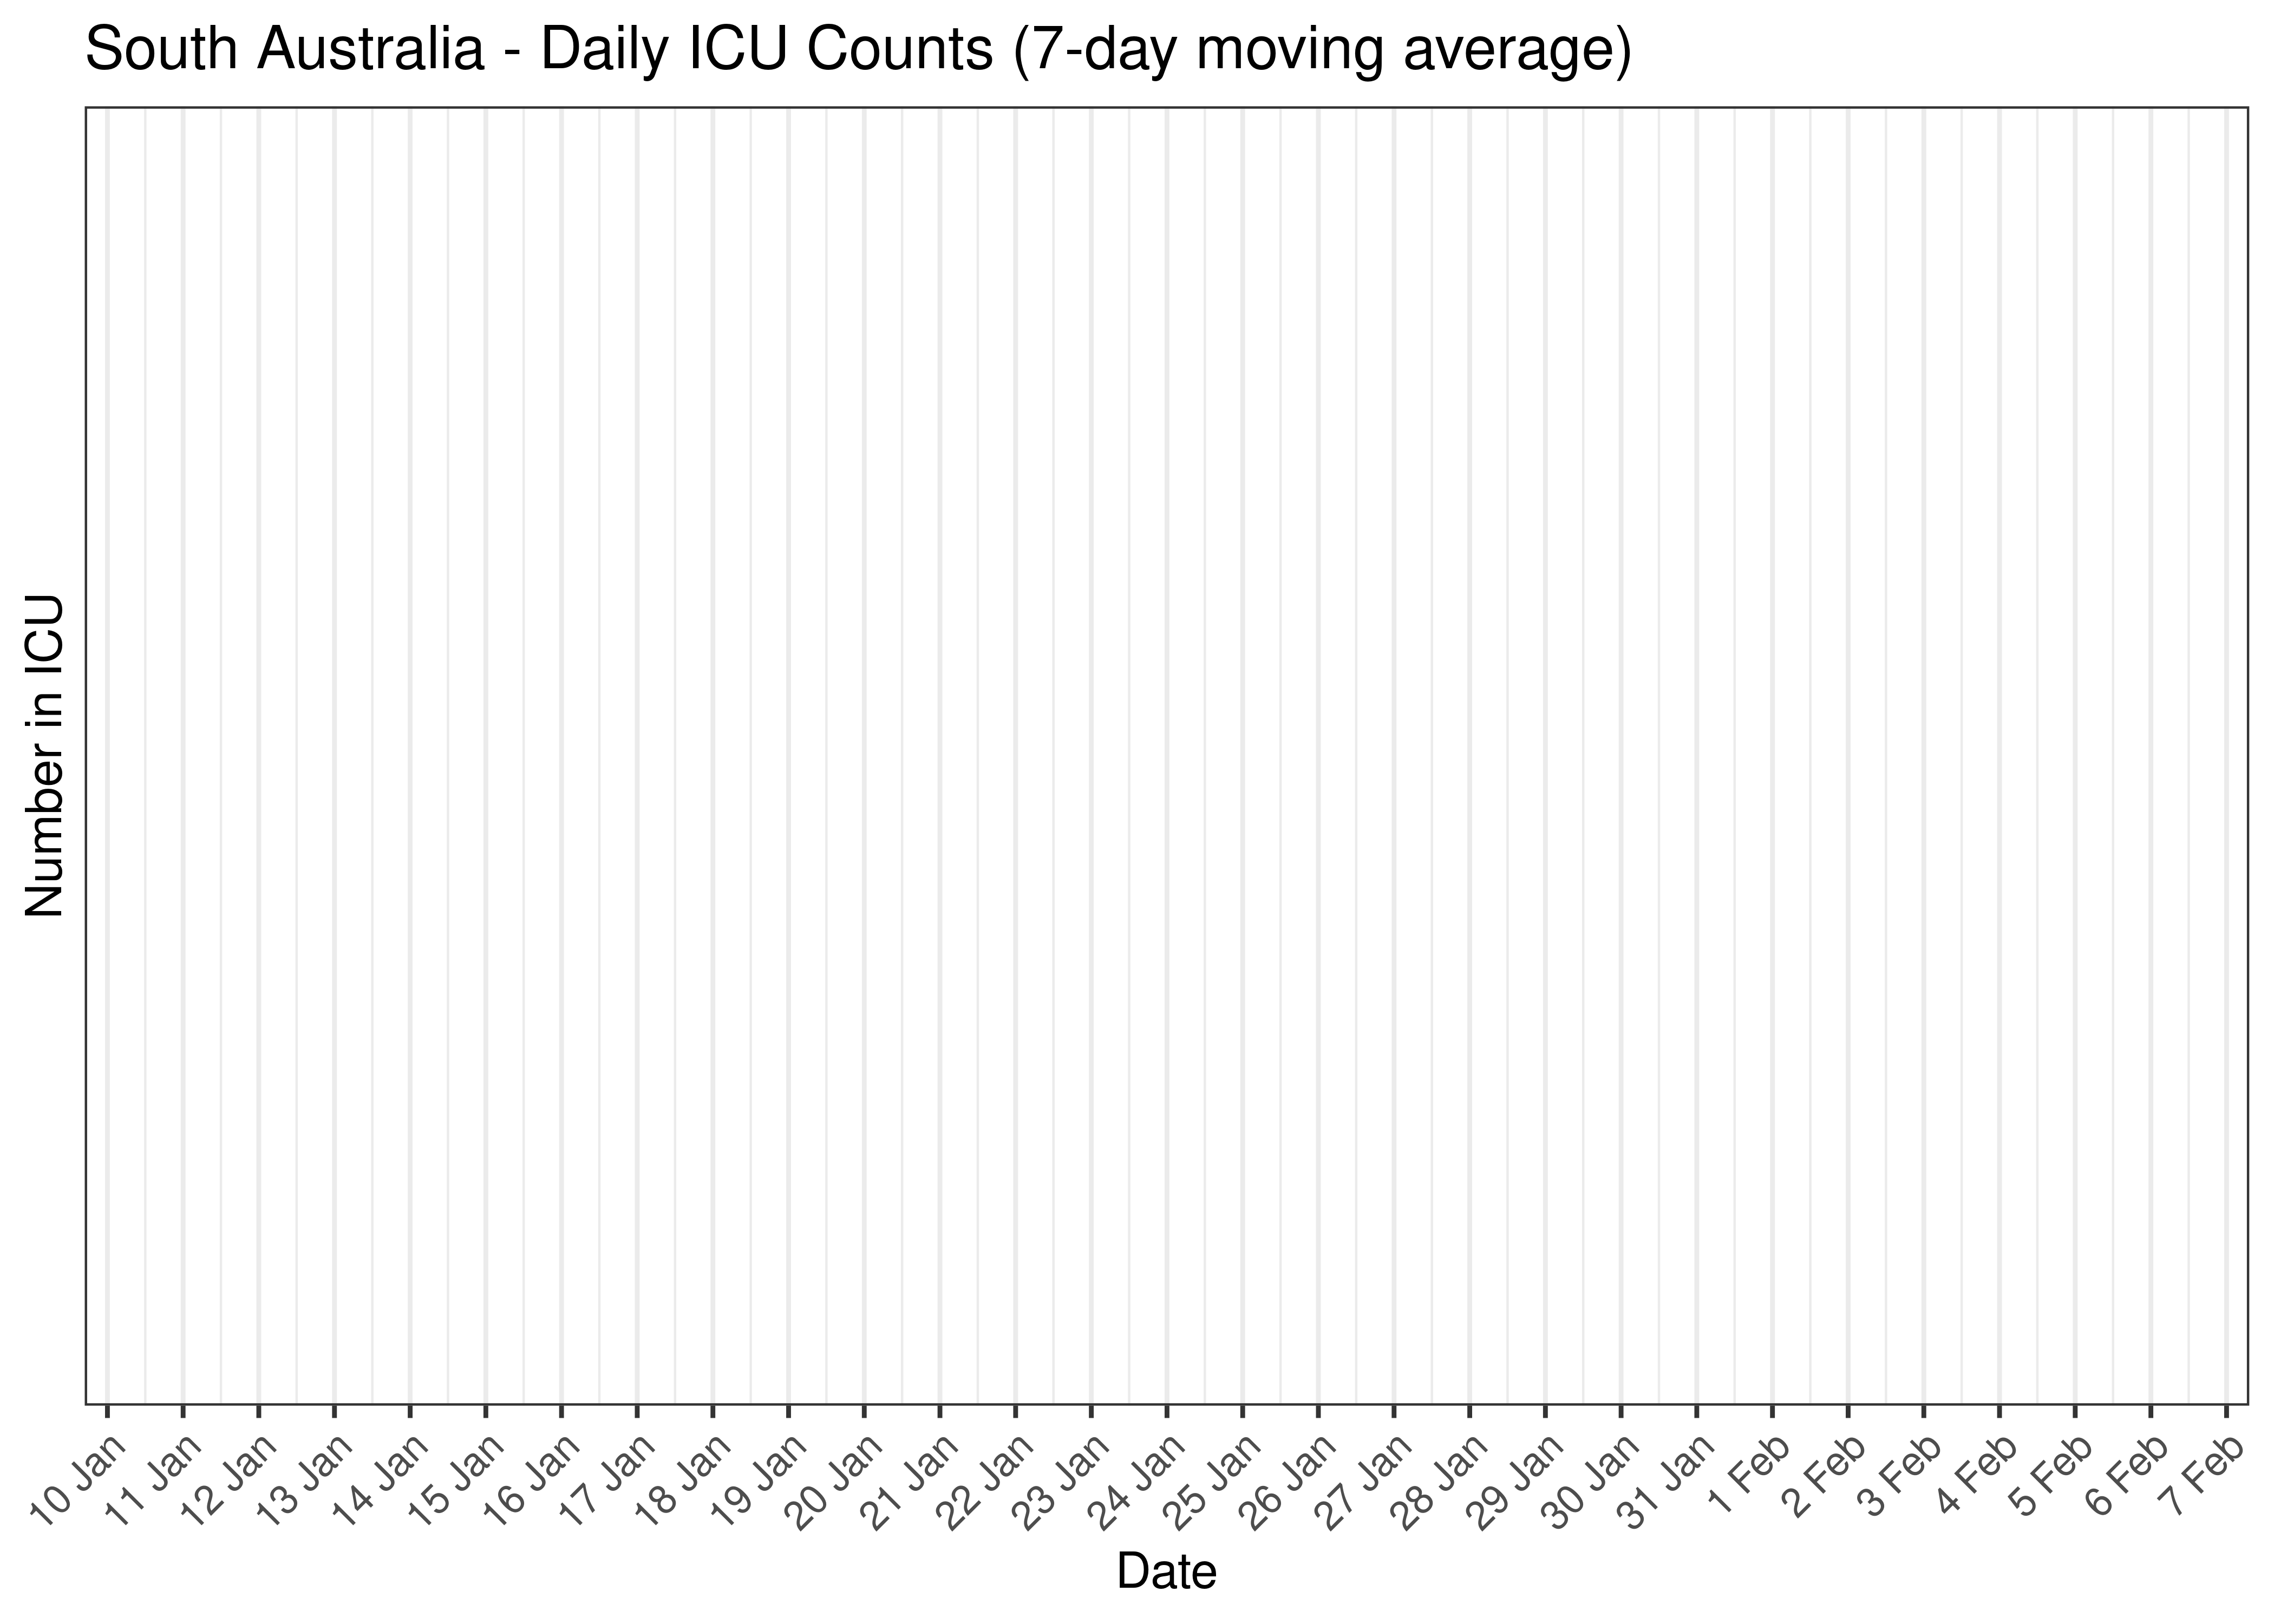 South Australia - Percentage Testing Positive (7-day moving average)